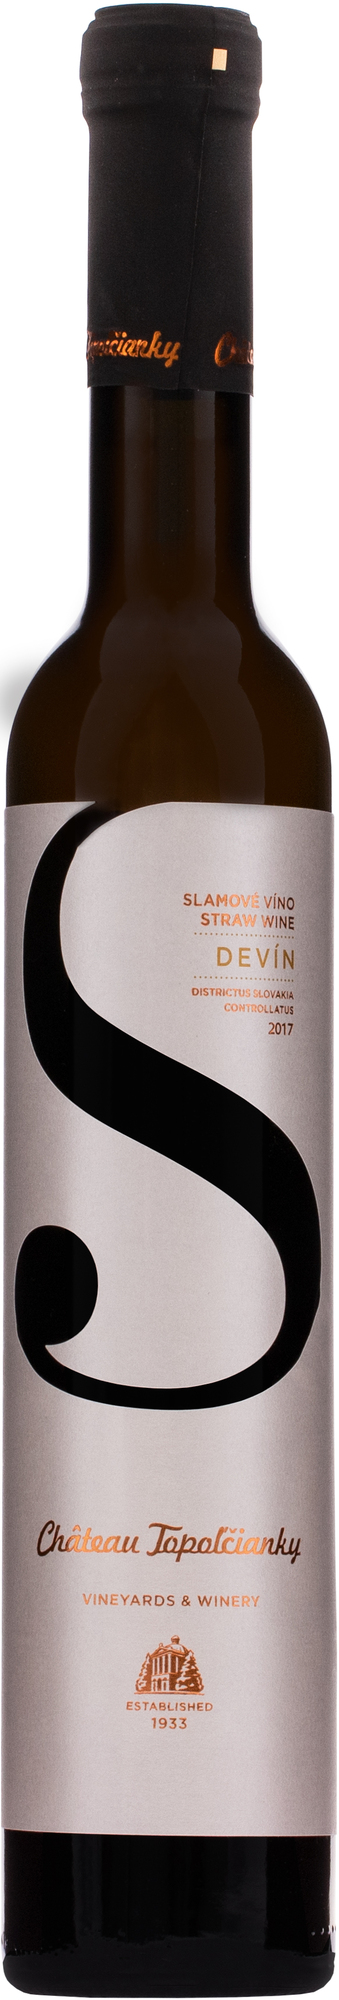 Chateau Topoľčianky Devín slamové víno 11% 0,375l (čistá flaša)